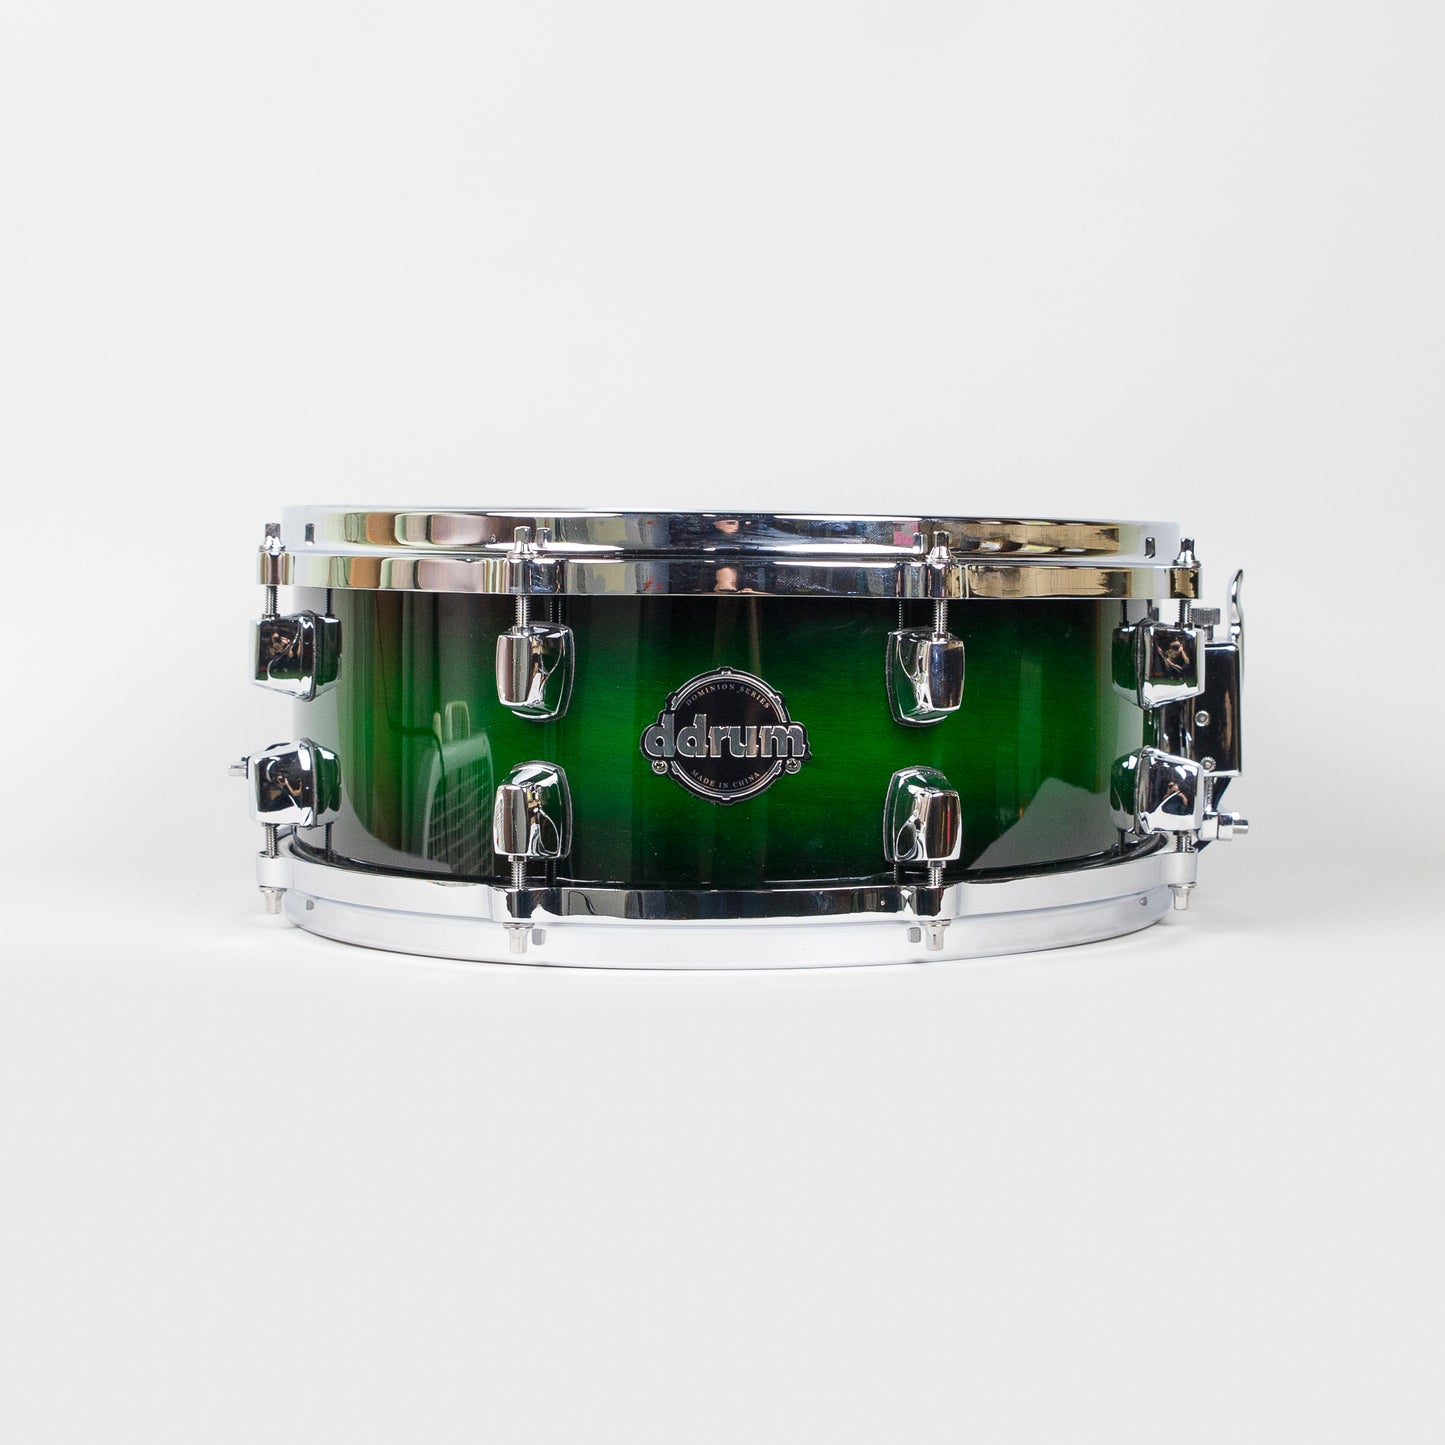 ddrum Dominion 5.5" x 14" Snare Drum in Green Burst